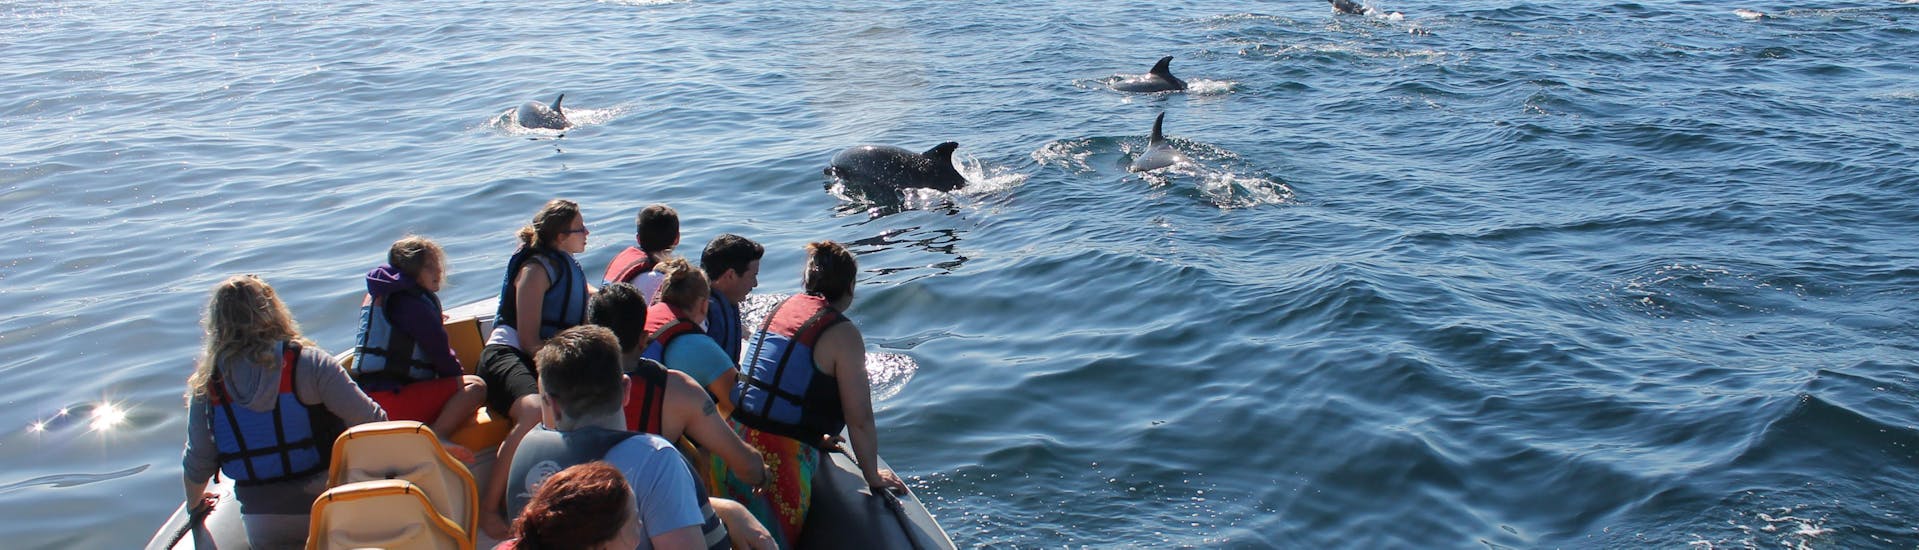 Paseo en Barco "Avistamiento de Delfines" - Praia Da Luz.